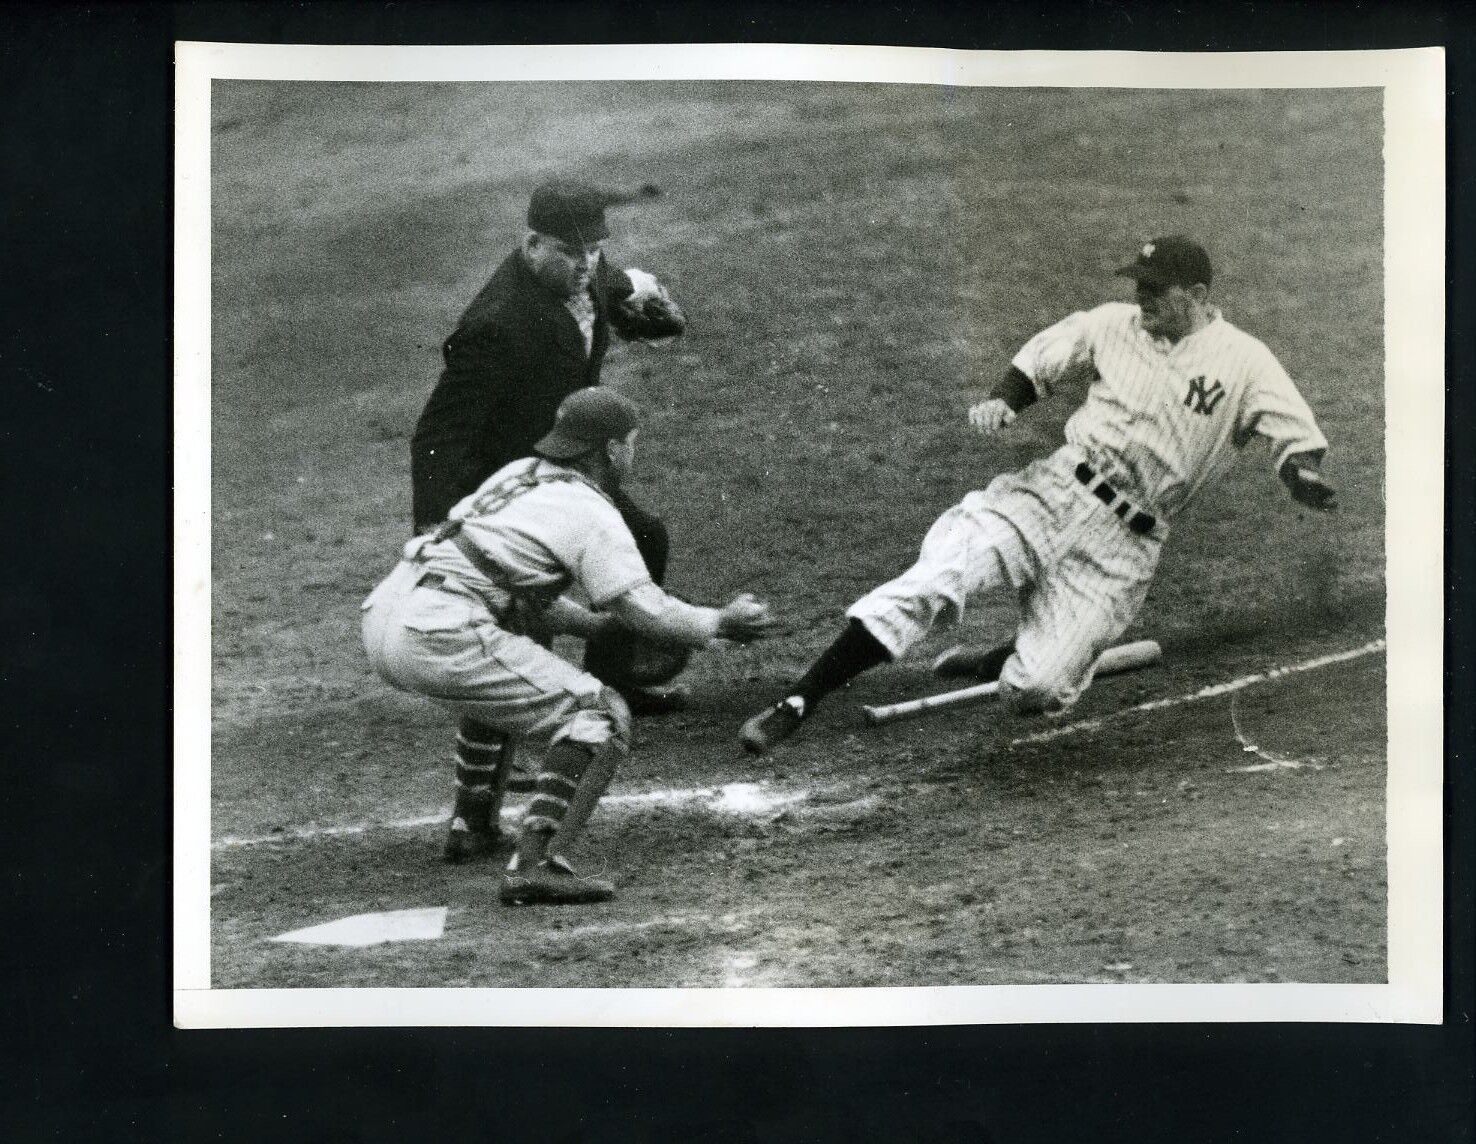 George Selkirk & Gus Mancuso 1936 World Series Press Photo Poster painting Yankees Giants